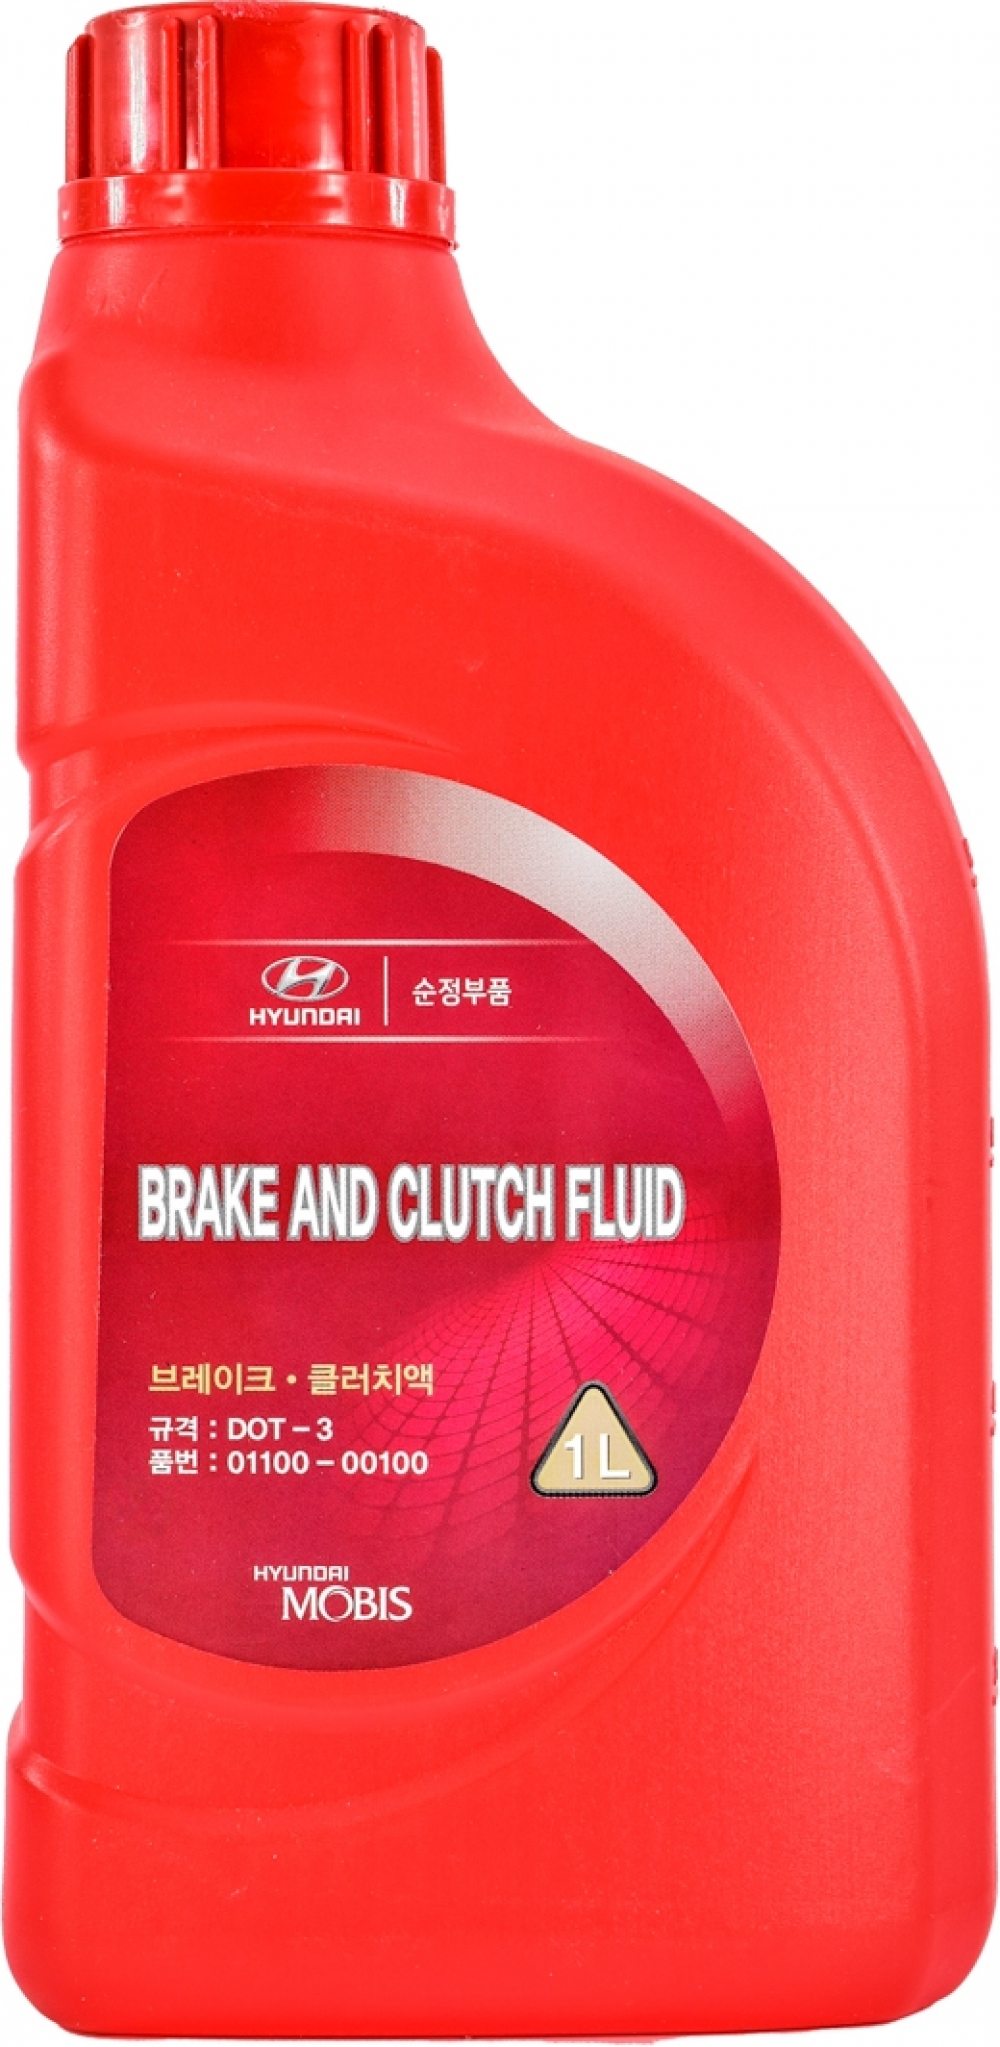 Hyundai-Kia (Mobis) Brake and Clutch Fluid DOT-3 (1л)